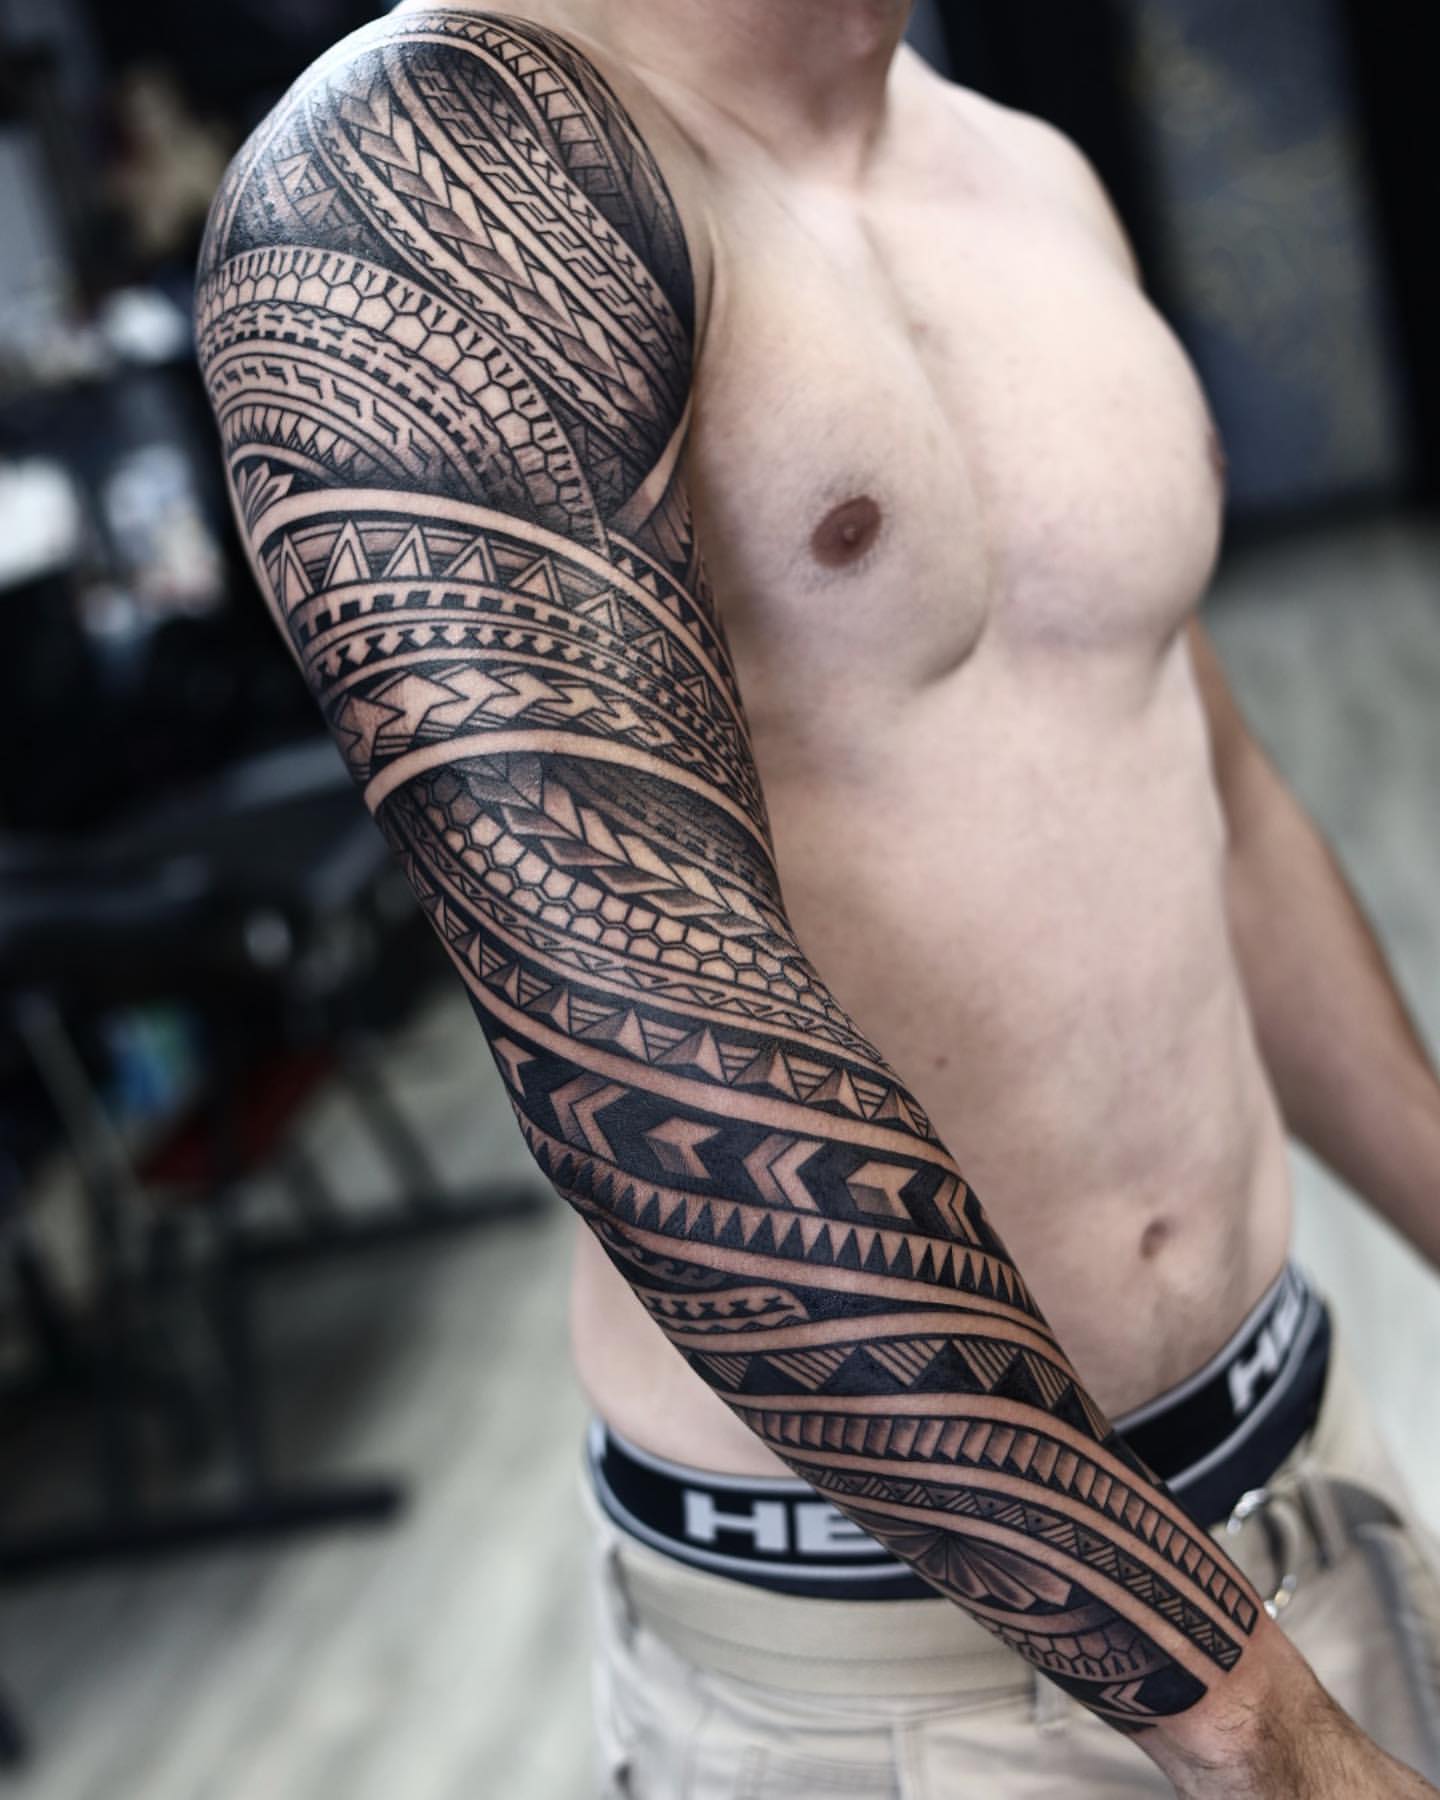 Polynesian Arm Tattoo - Best Tattoo Ideas Gallery